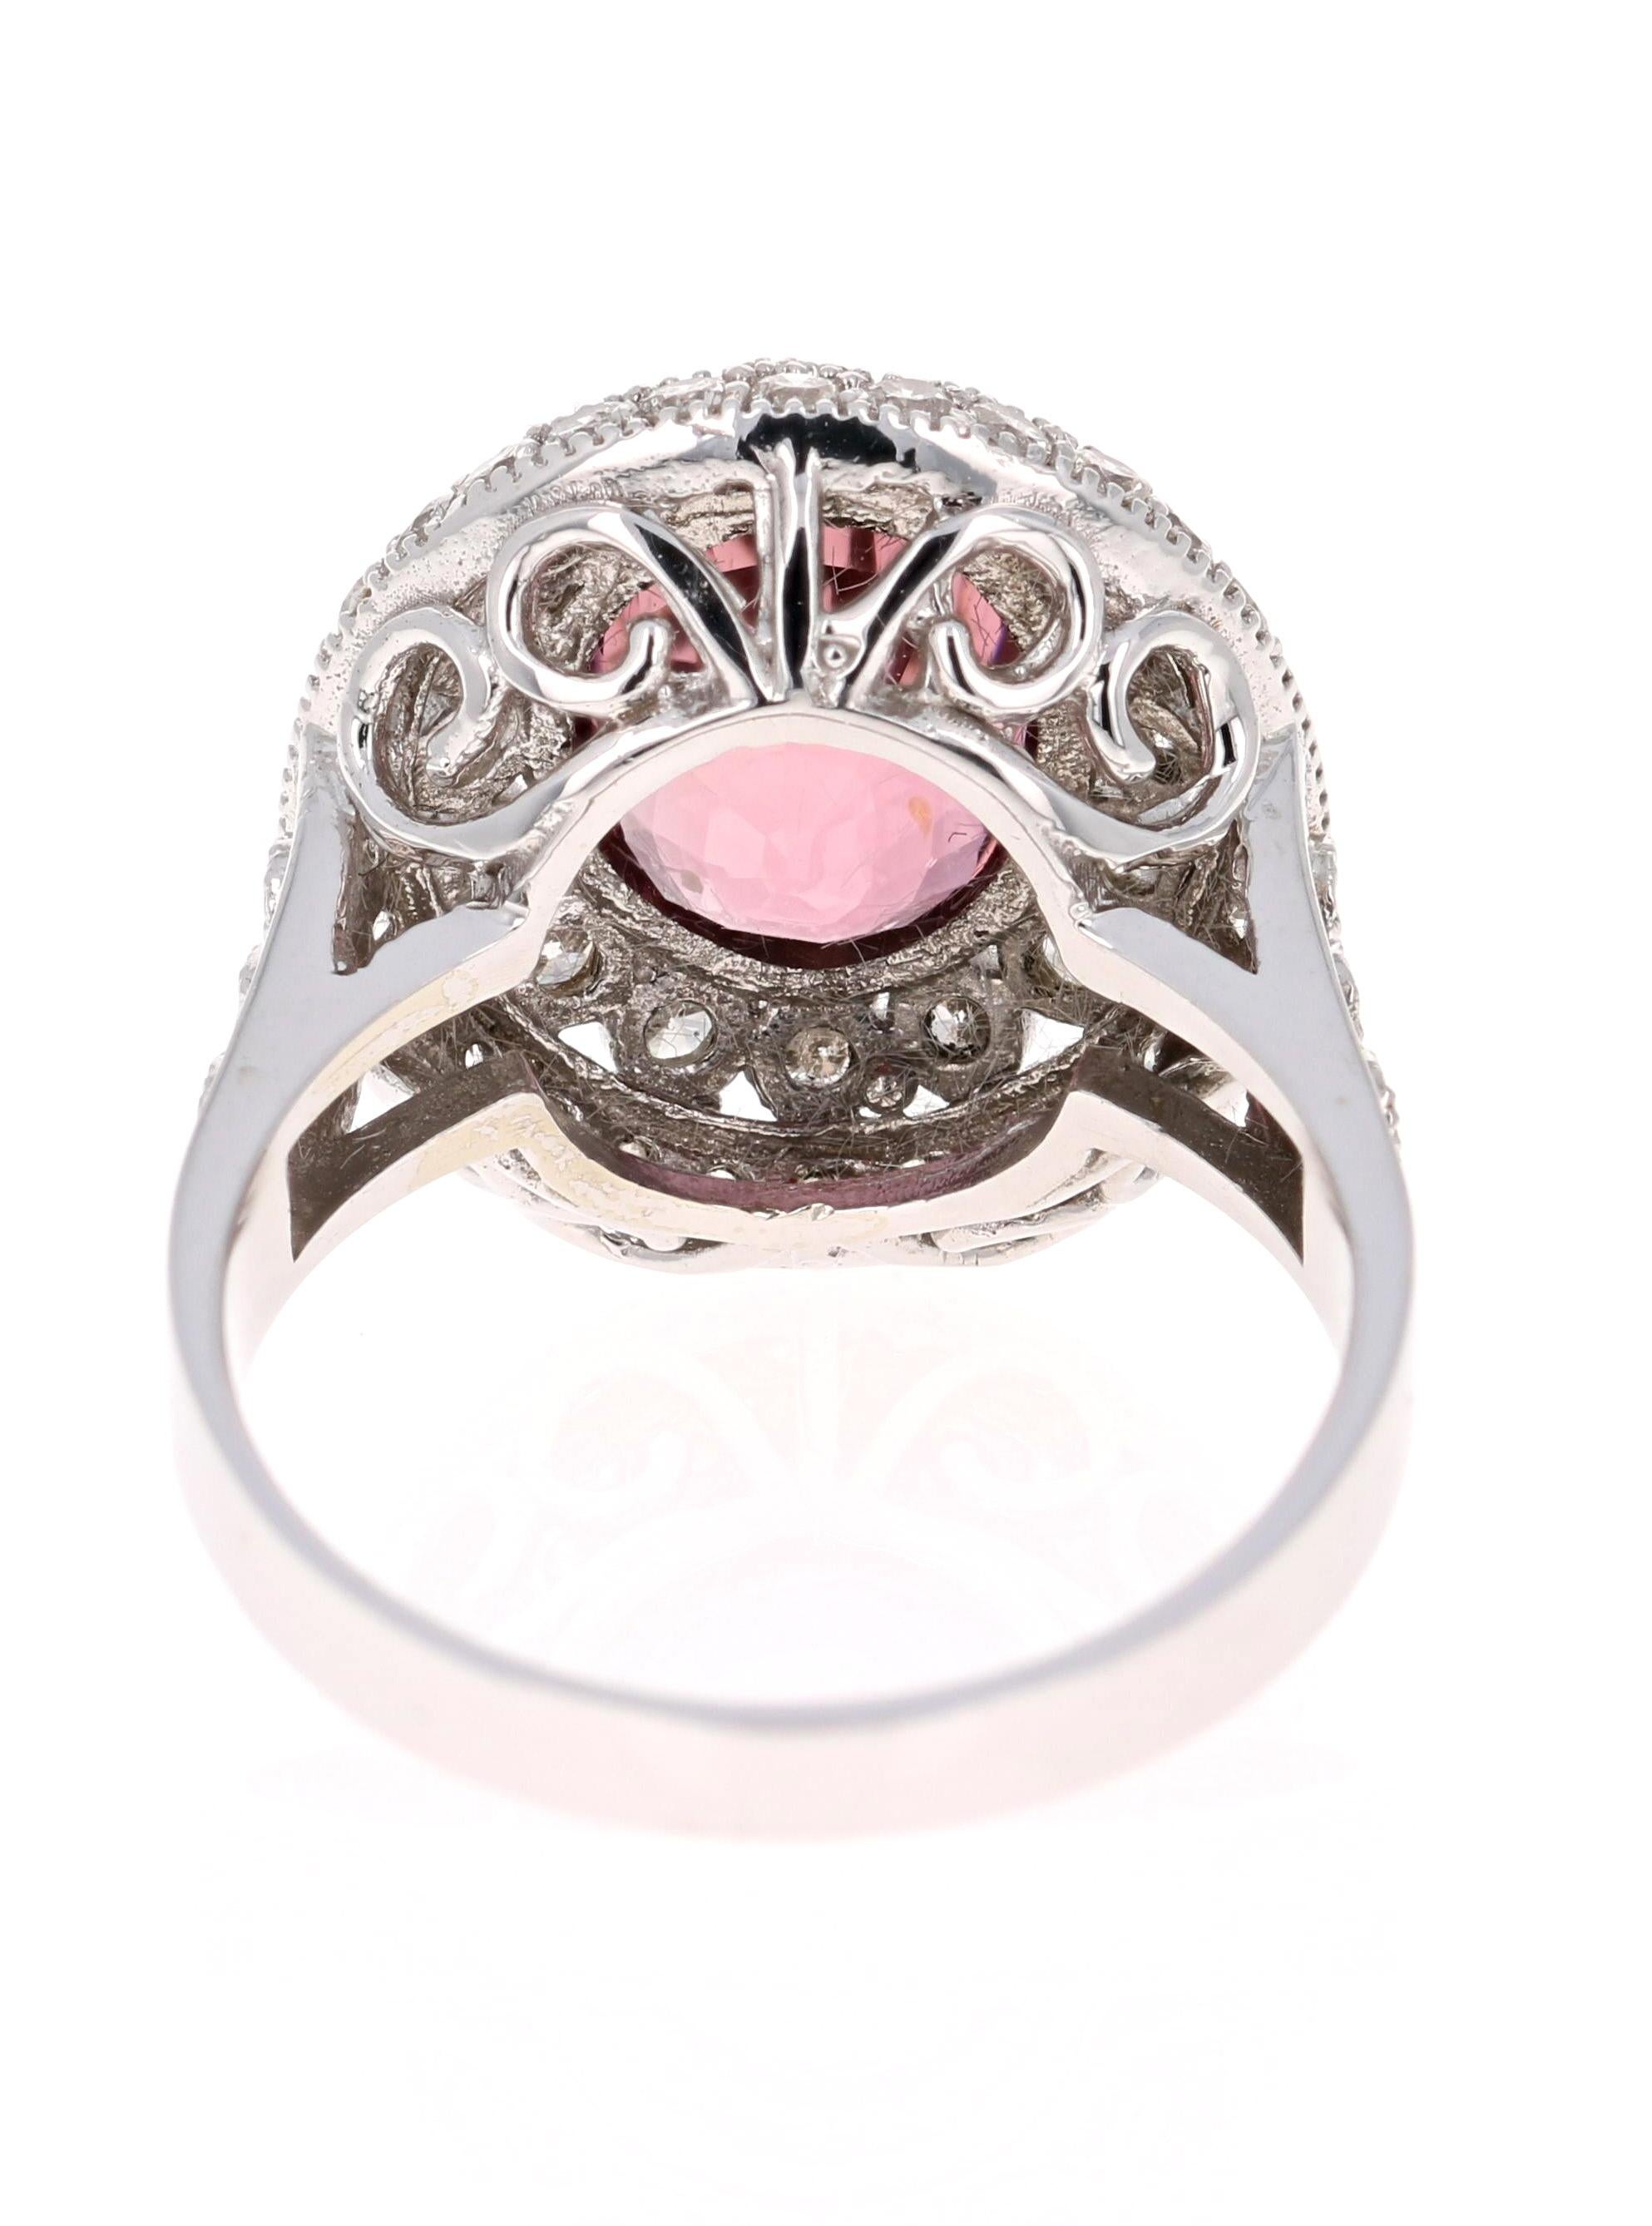 Women's 4.47 Carat Pink Tourmaline Diamond White Gold Cocktail Ring For Sale